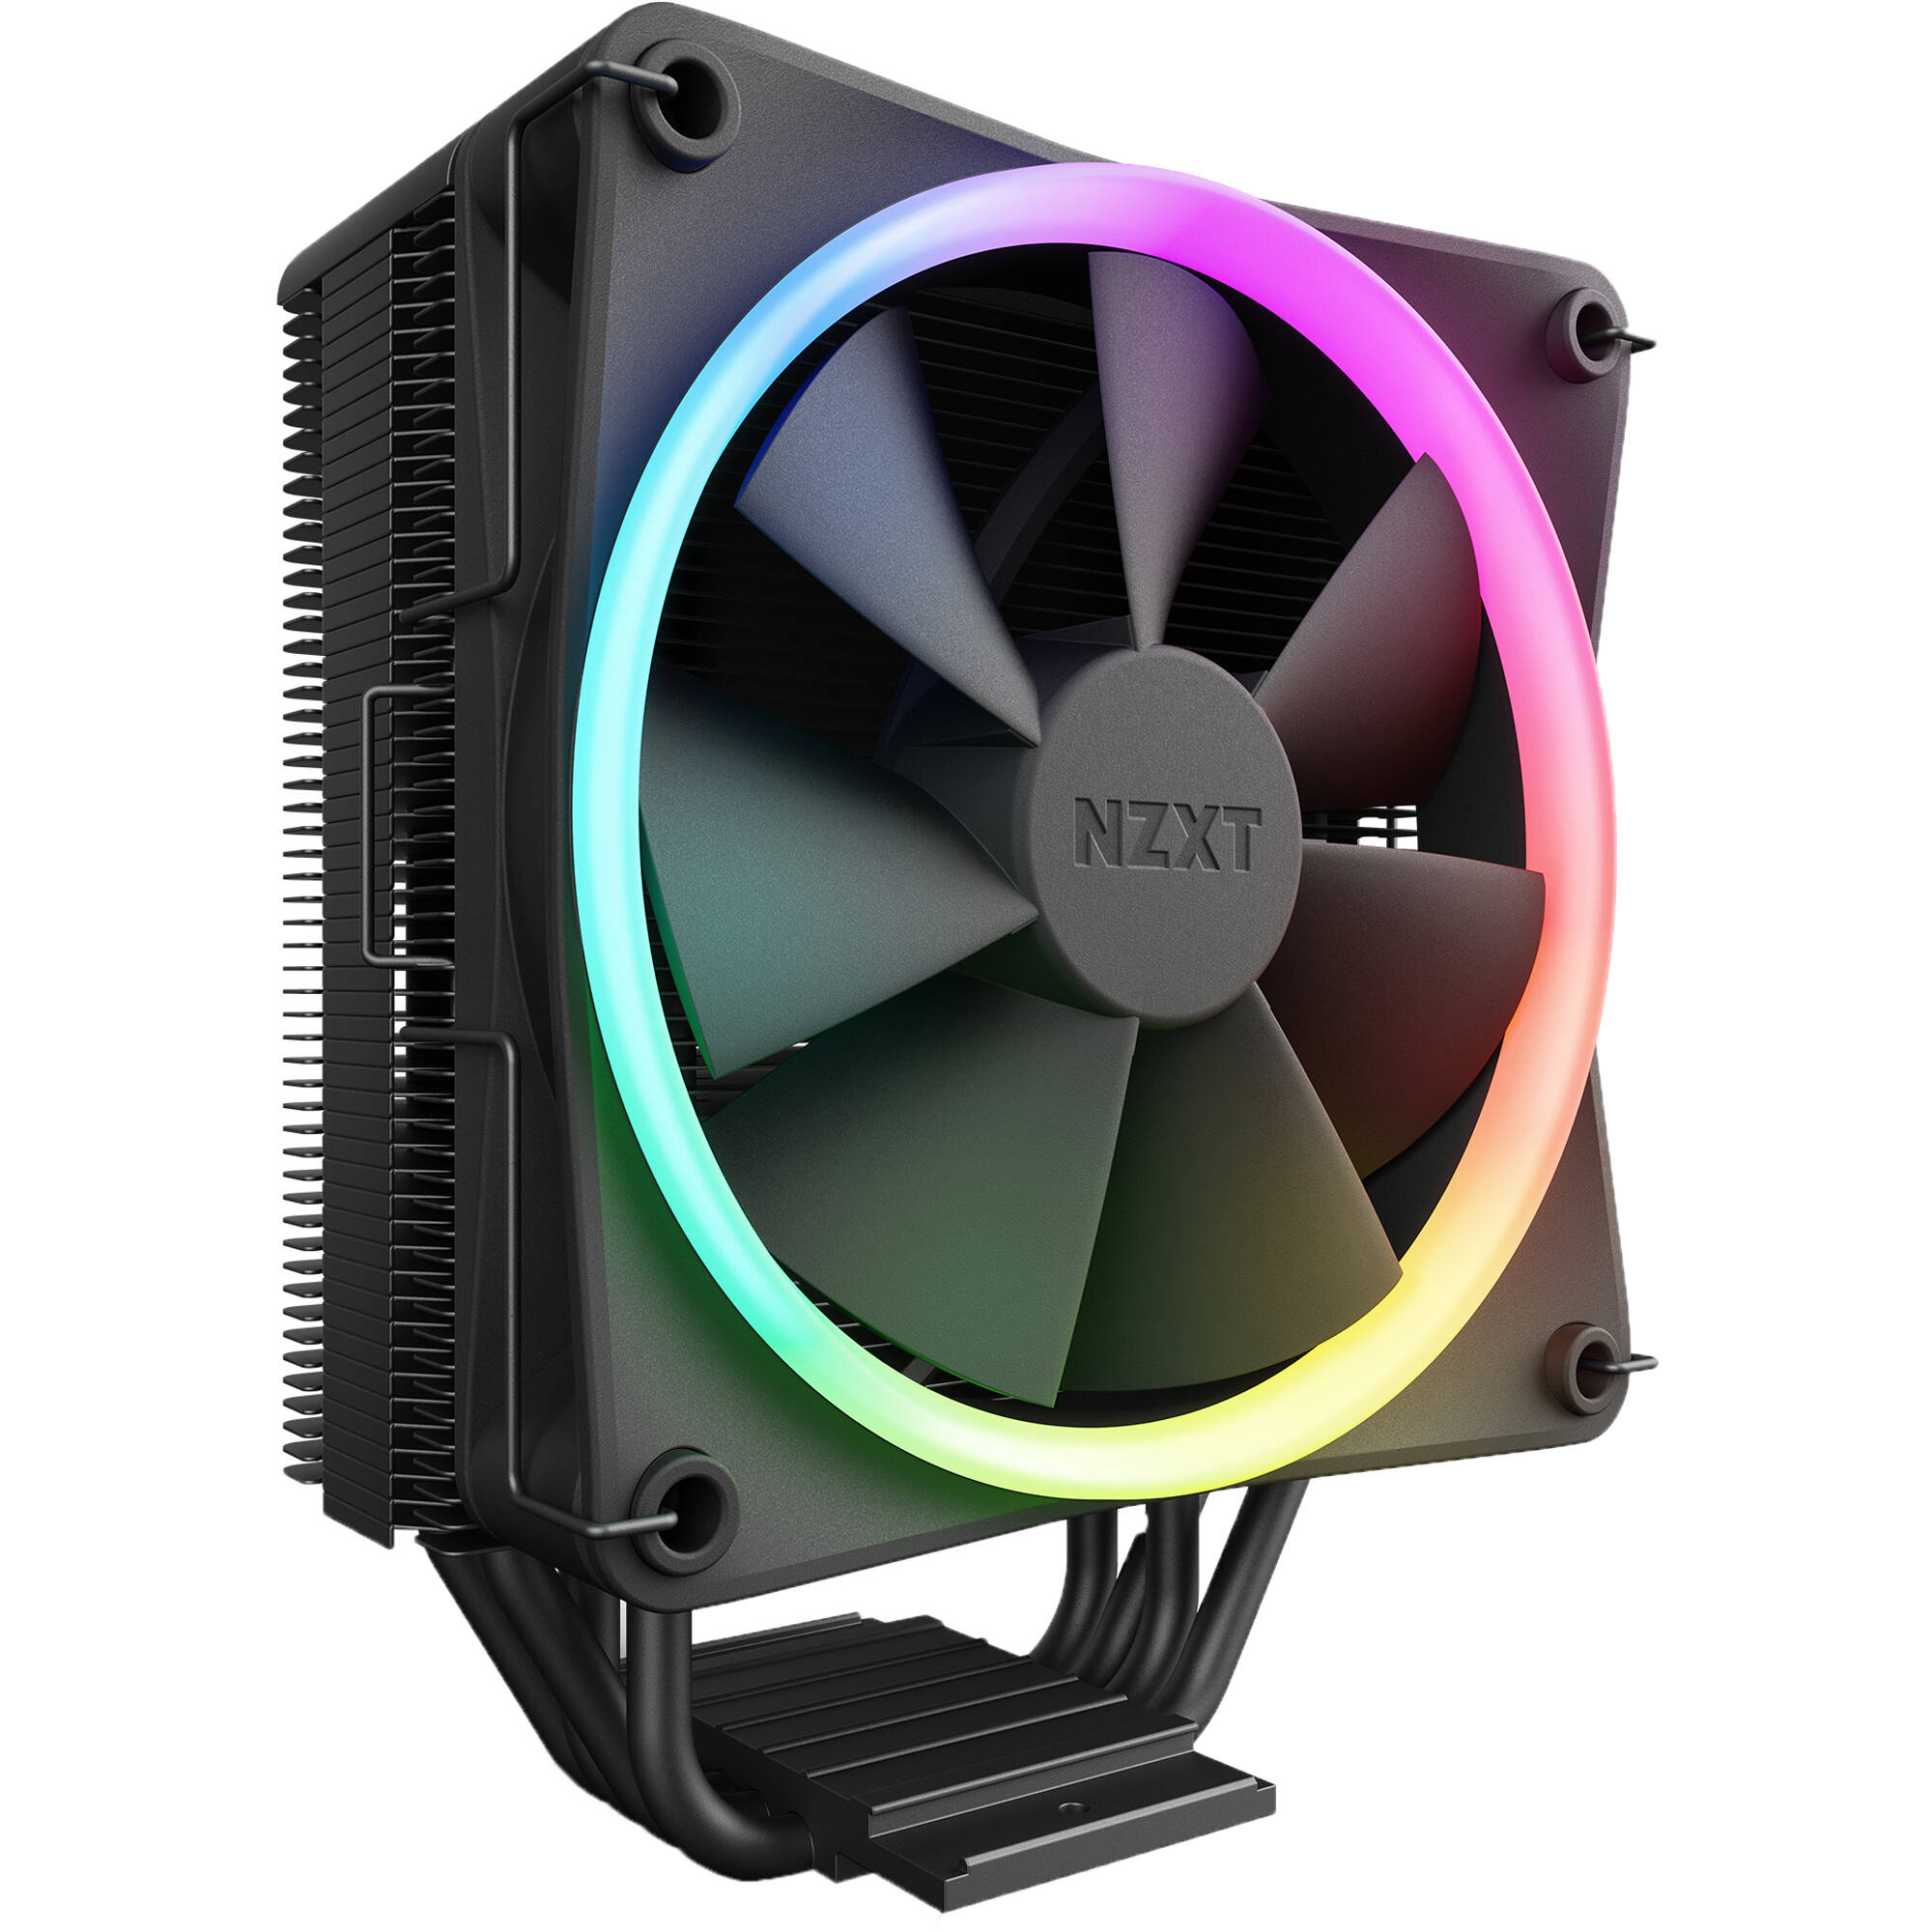 NZXT T120 RGB CPU Air Cooler – Black